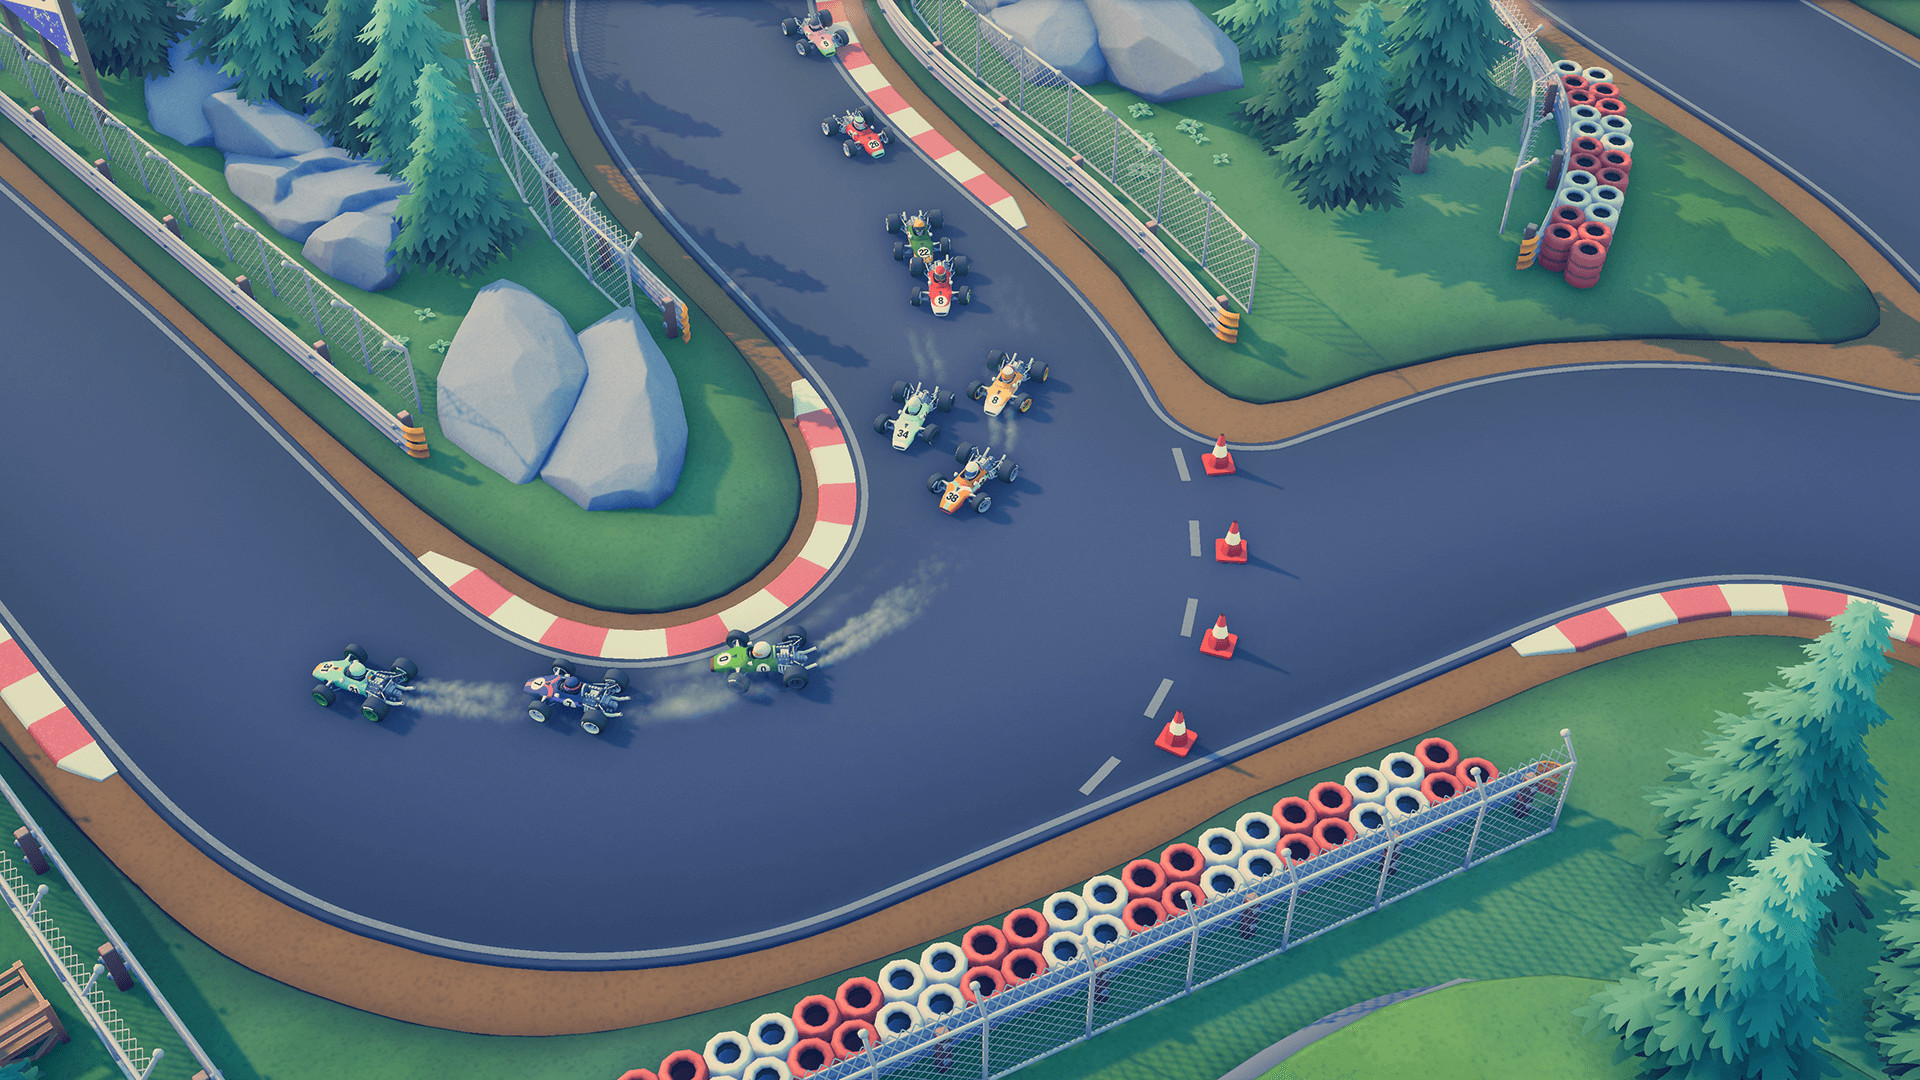 More information about "Circuit Superstars disponibile: divertiamoci con un bel racing game a 360°!"